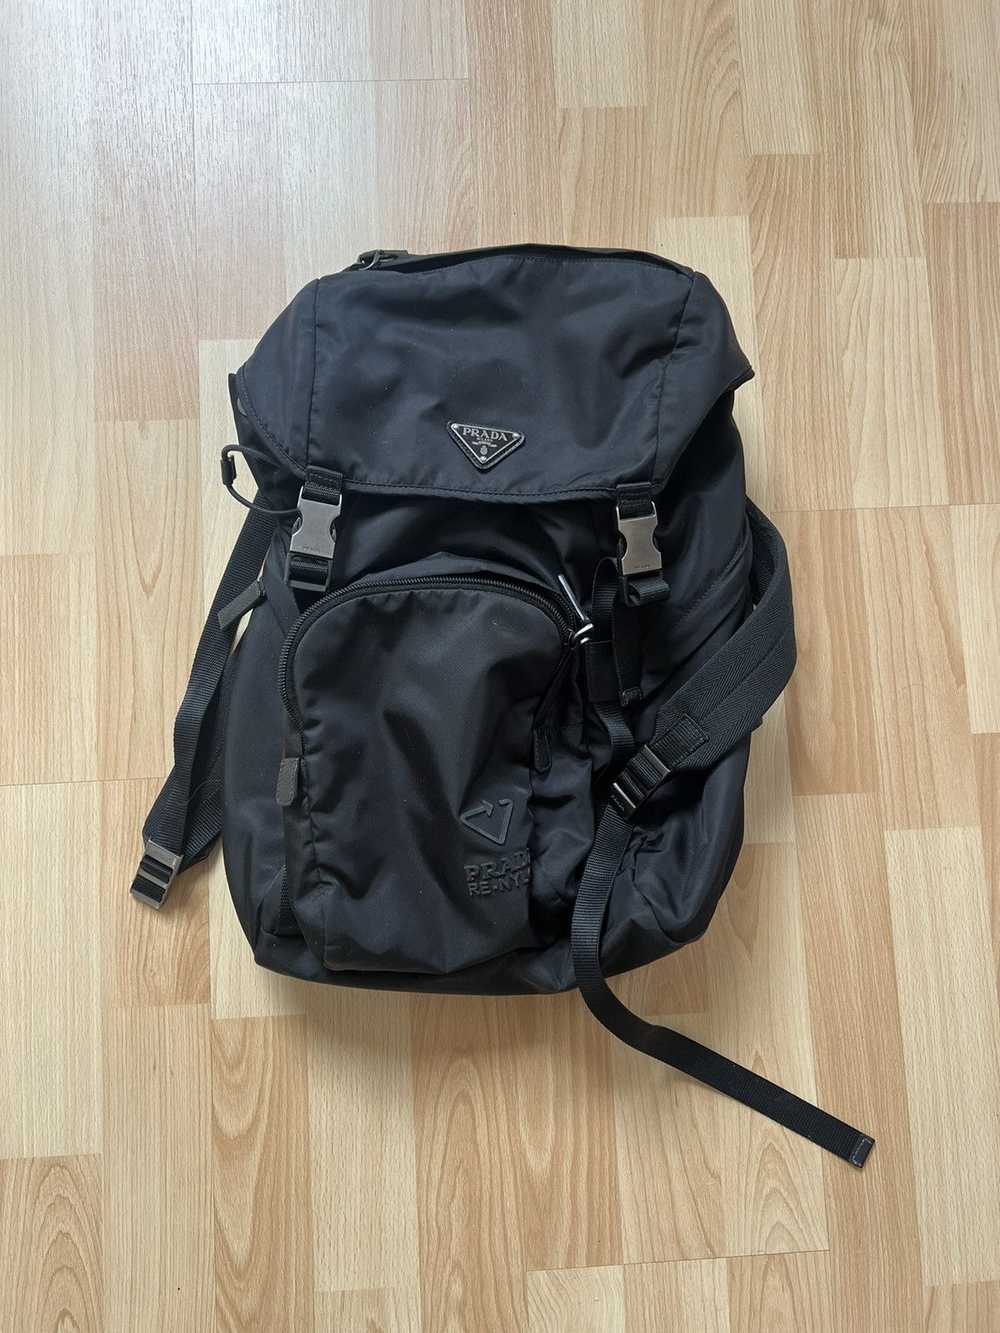 Prada PRADA SS 22 Re-Nylon Backpack - image 8